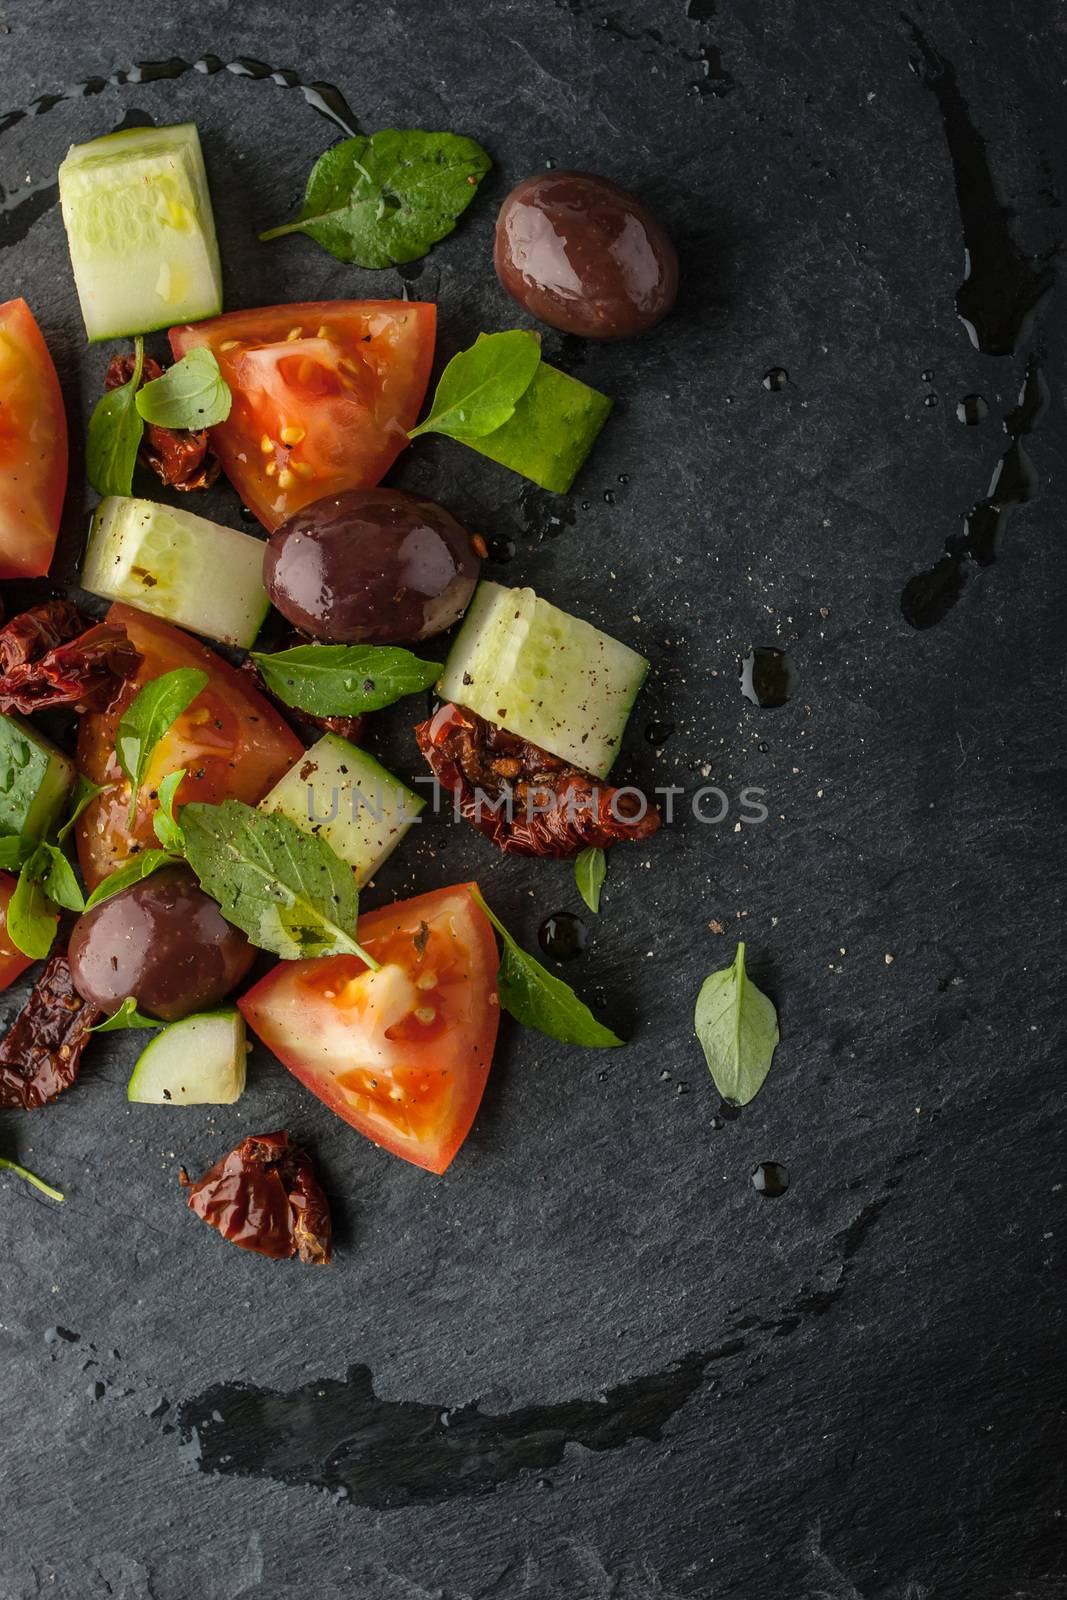 Panzanella salad on the black stone by Deniskarpenkov